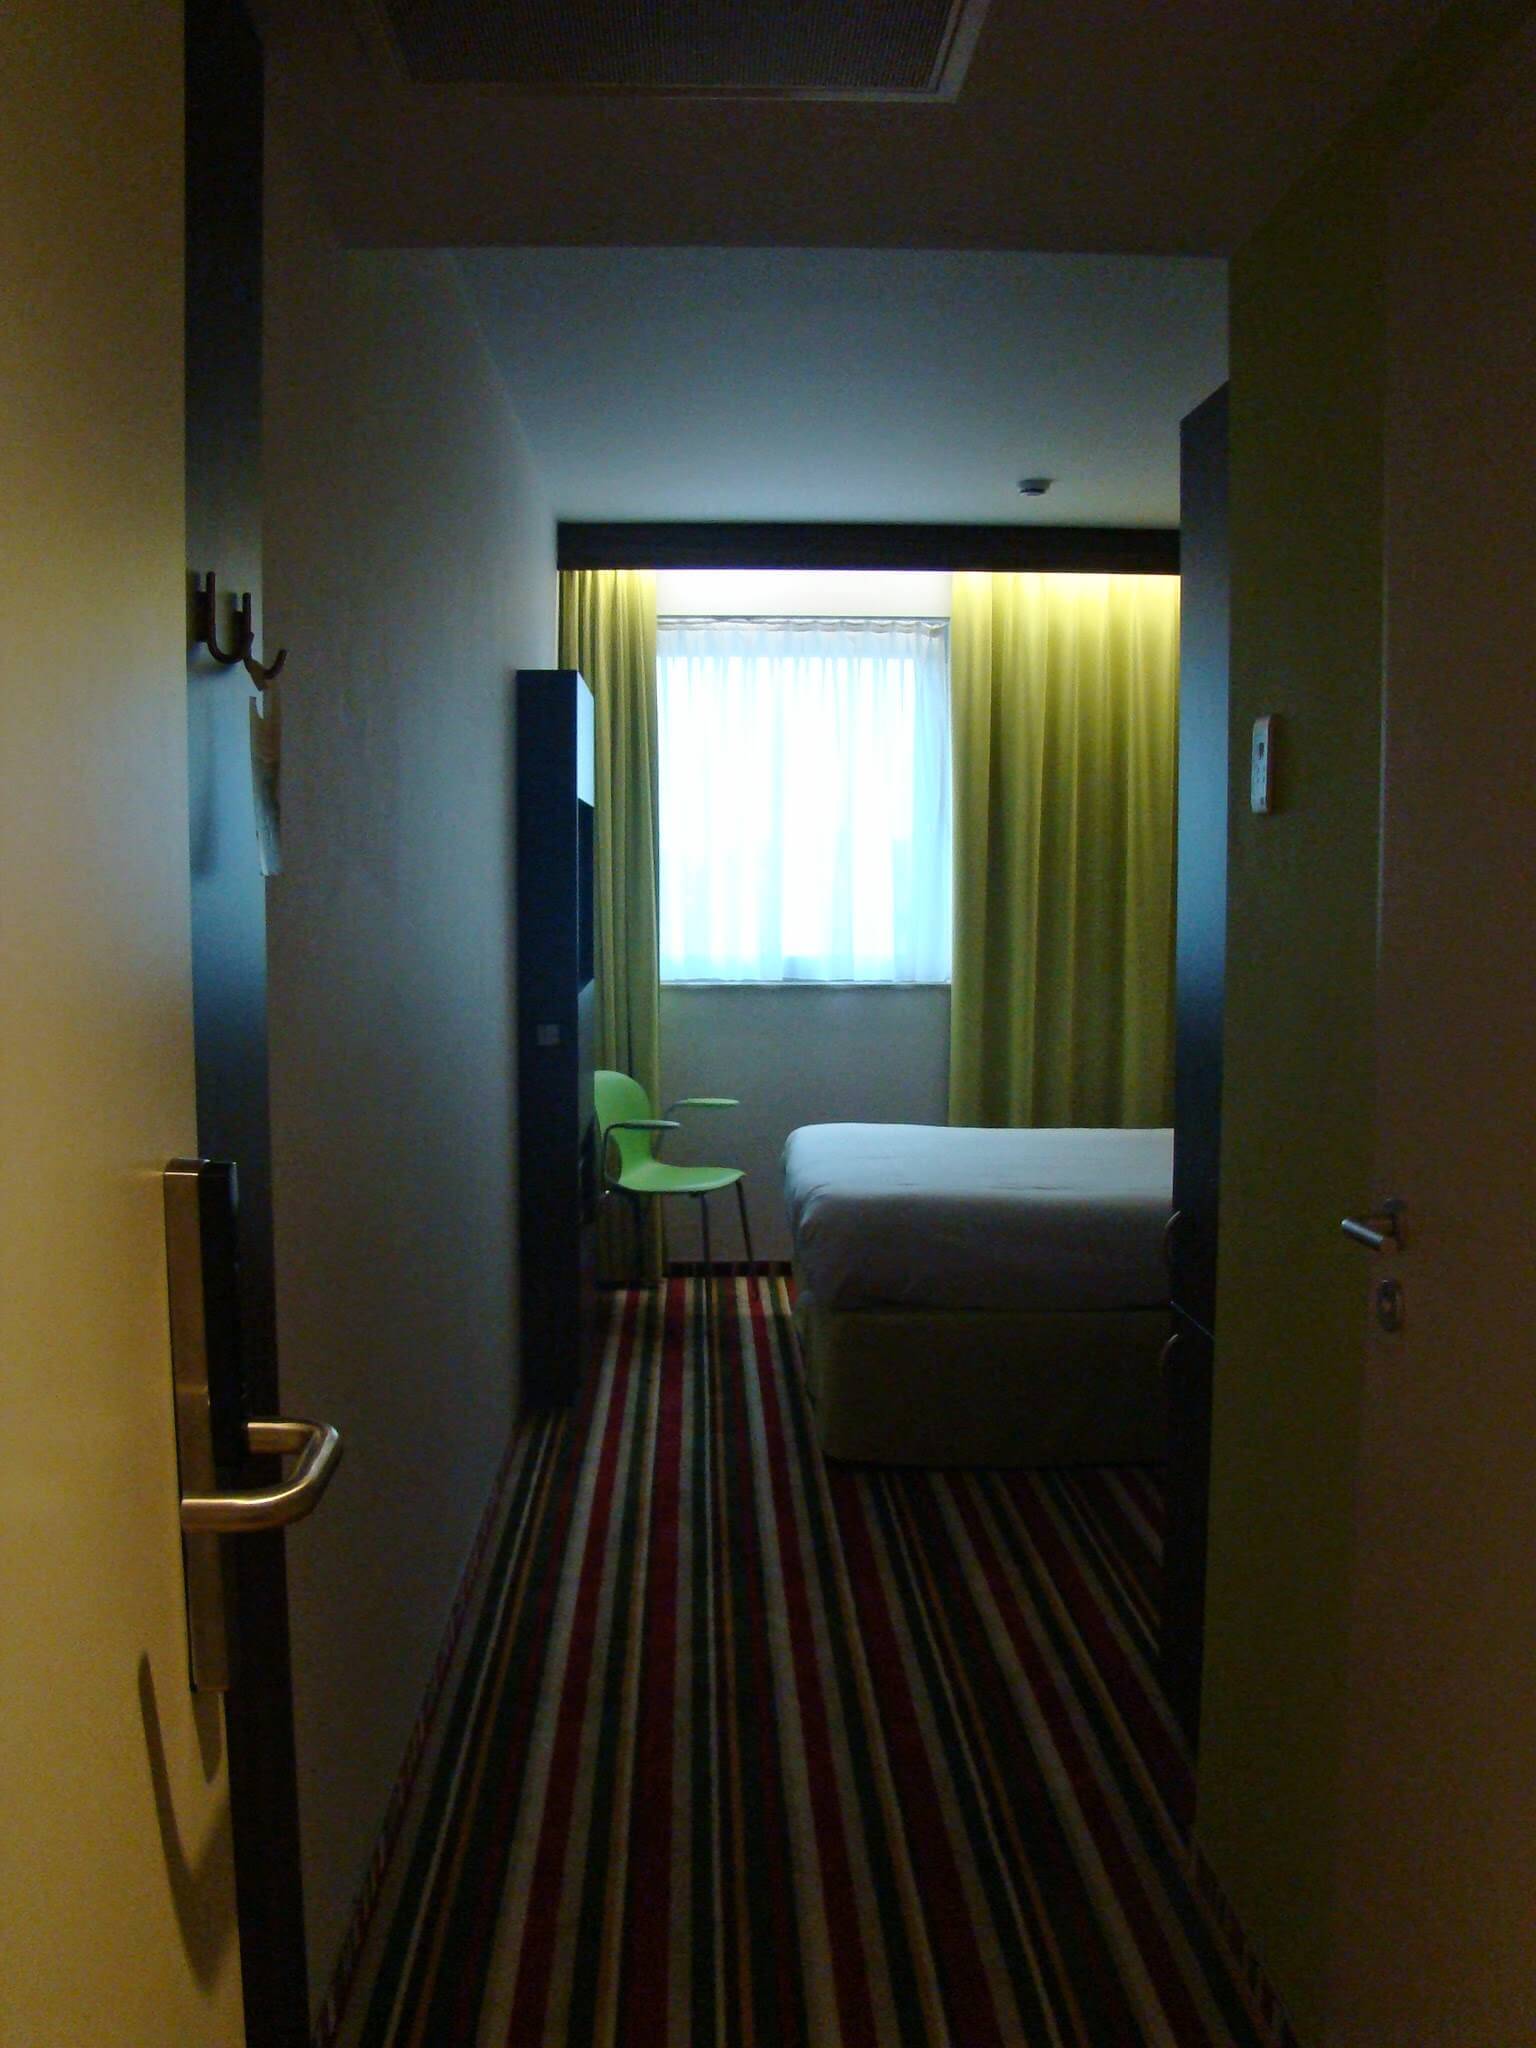 Zeebrugge. Hotel room